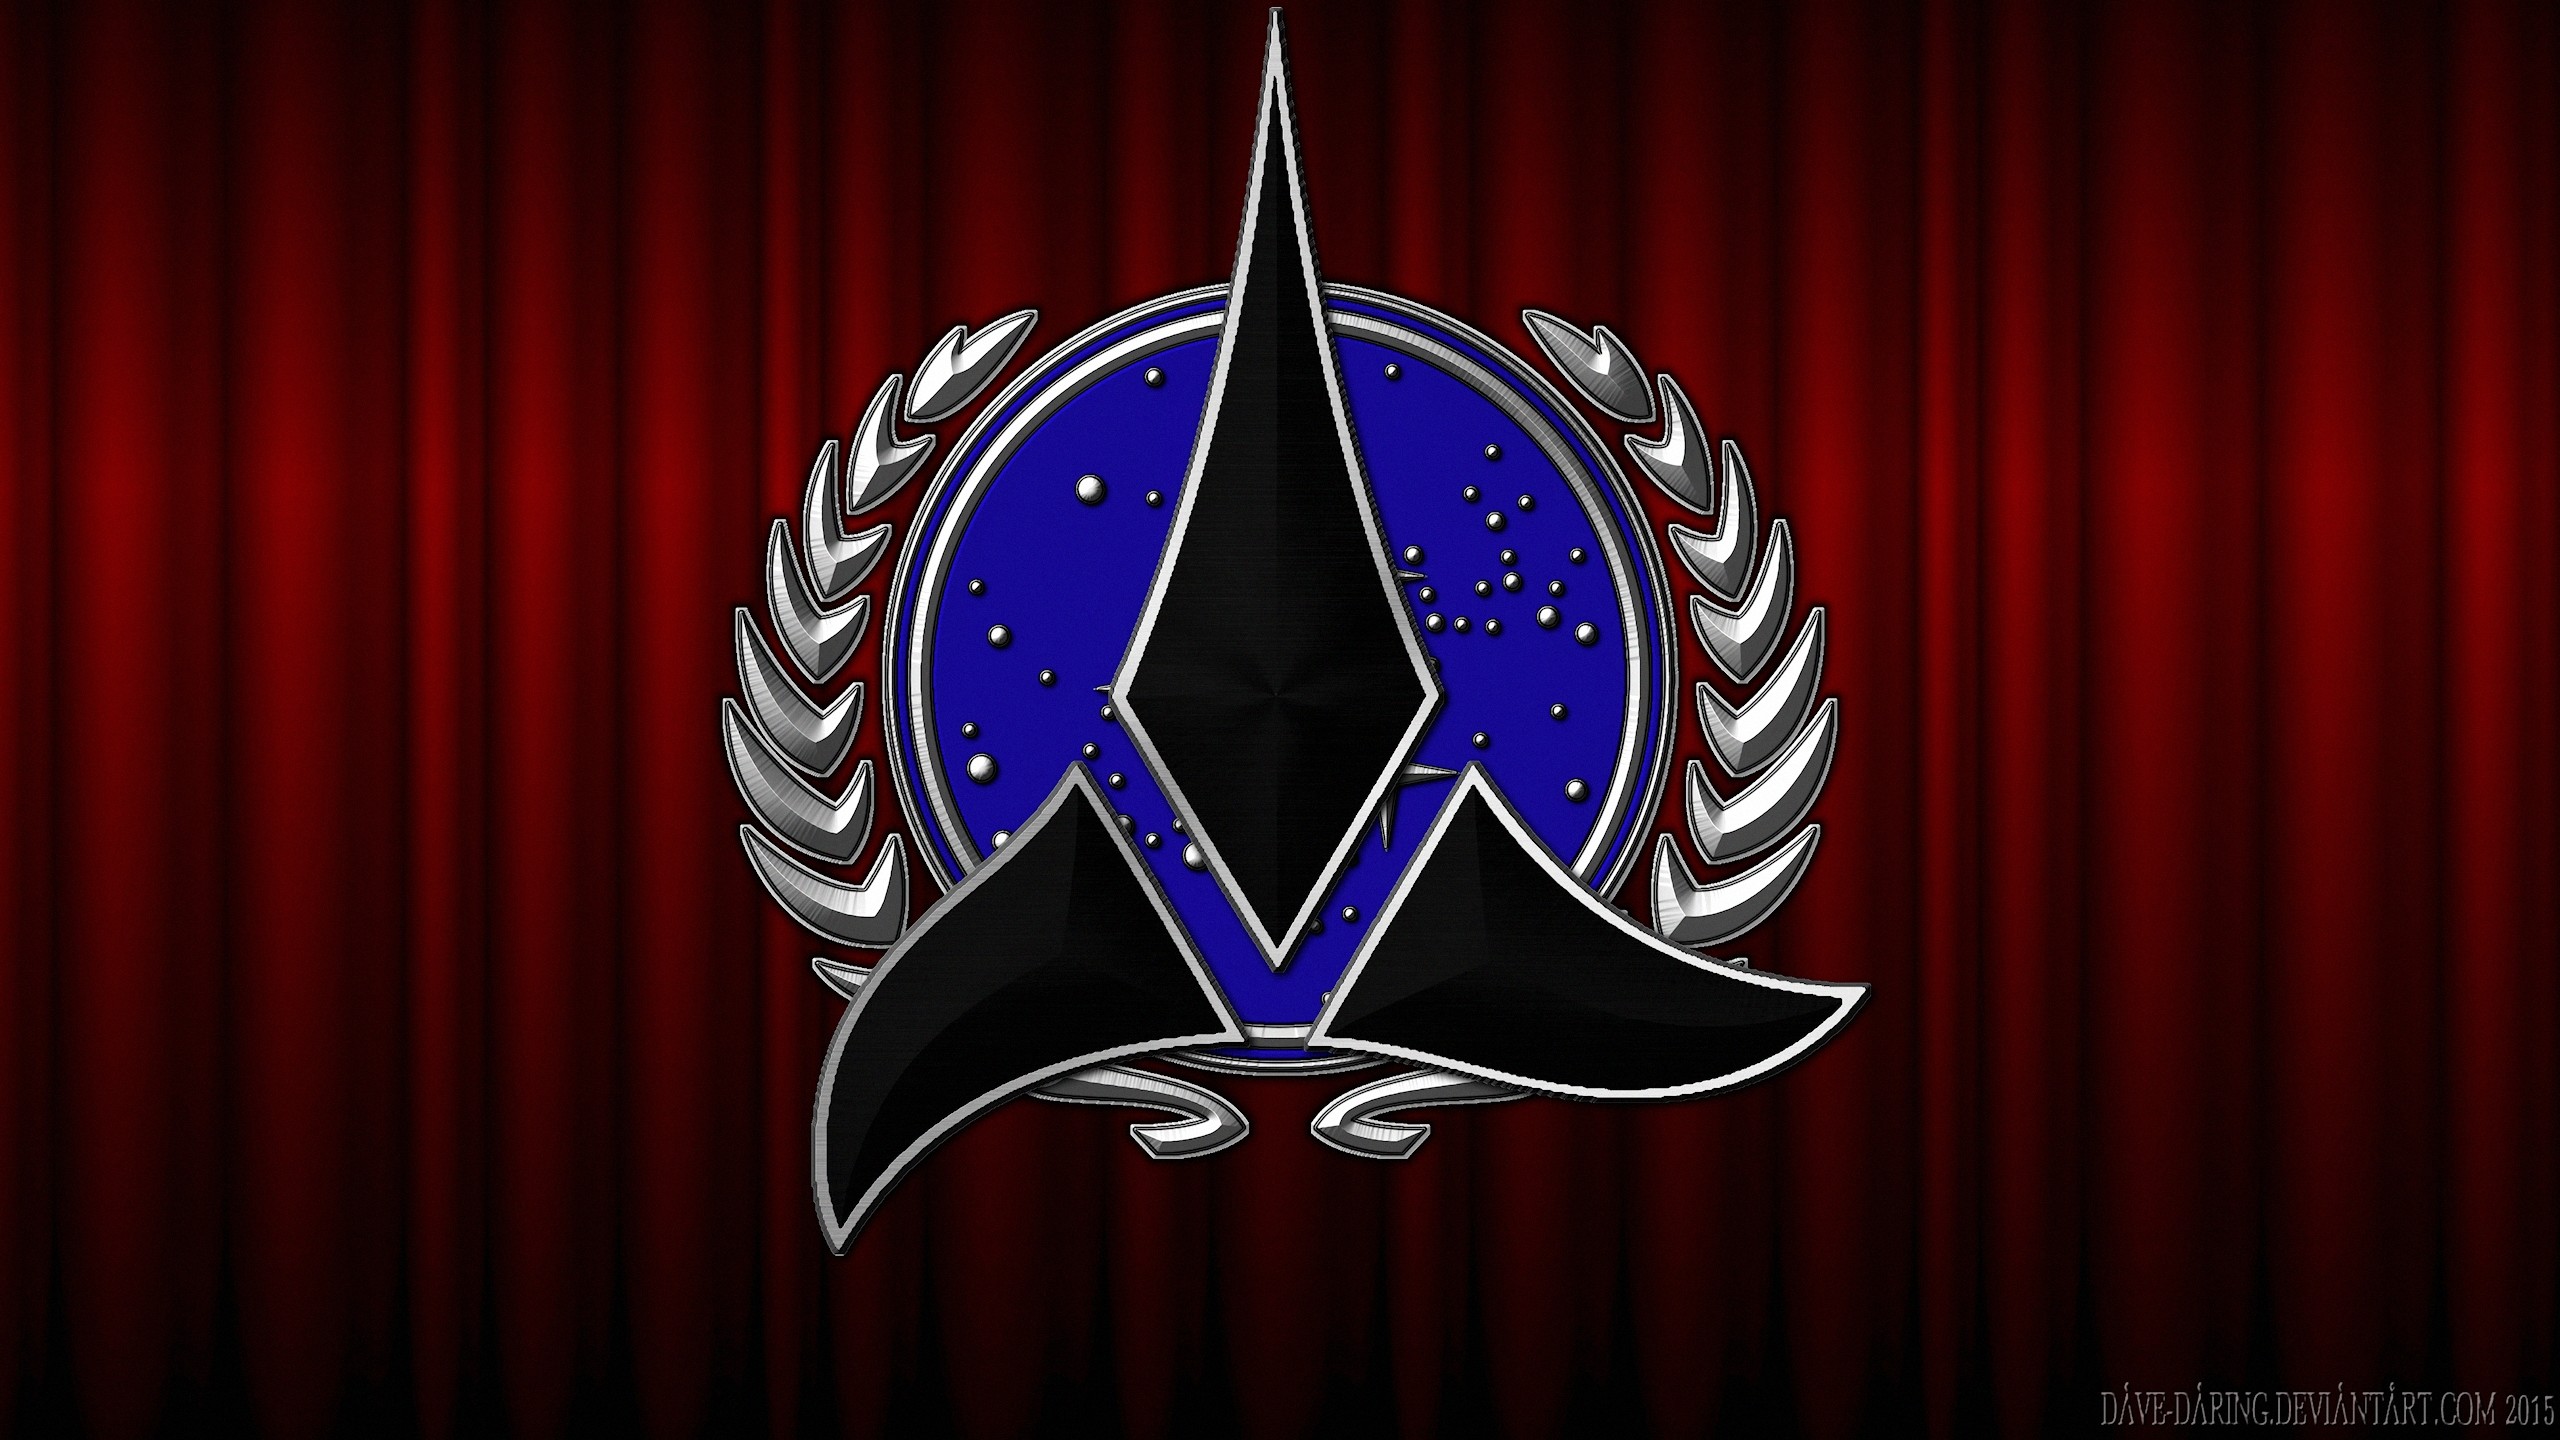 2560x1440 ... Federation Klingon Alliance by Dave-Daring